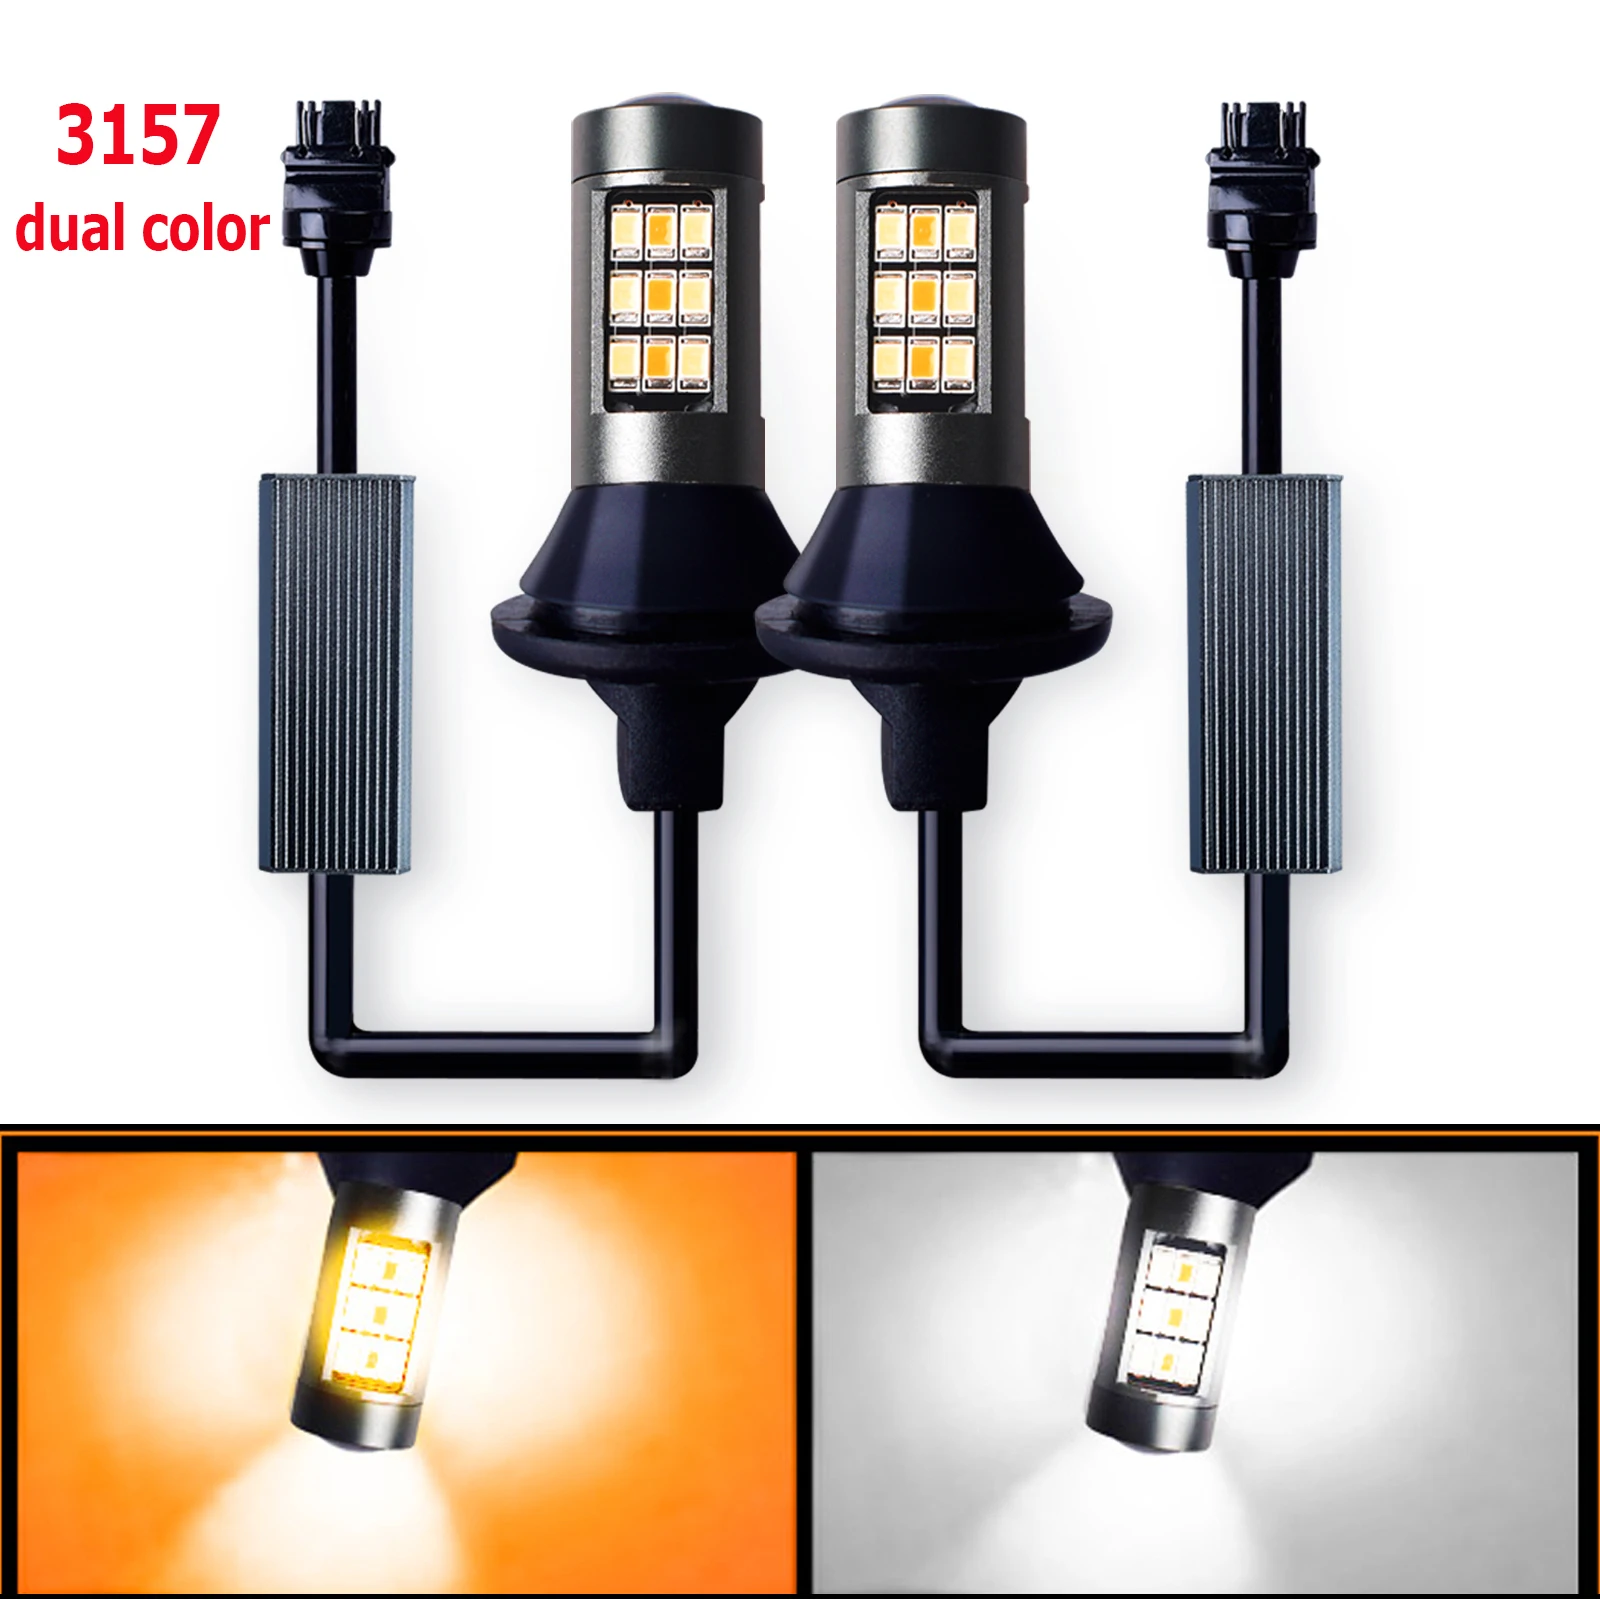 

2PCS Canbus Error Free LED Bulb PY21/5W BAY15D 3157 7443 Car Turn Signal Light DRL 12V White Amber Auto Lamp